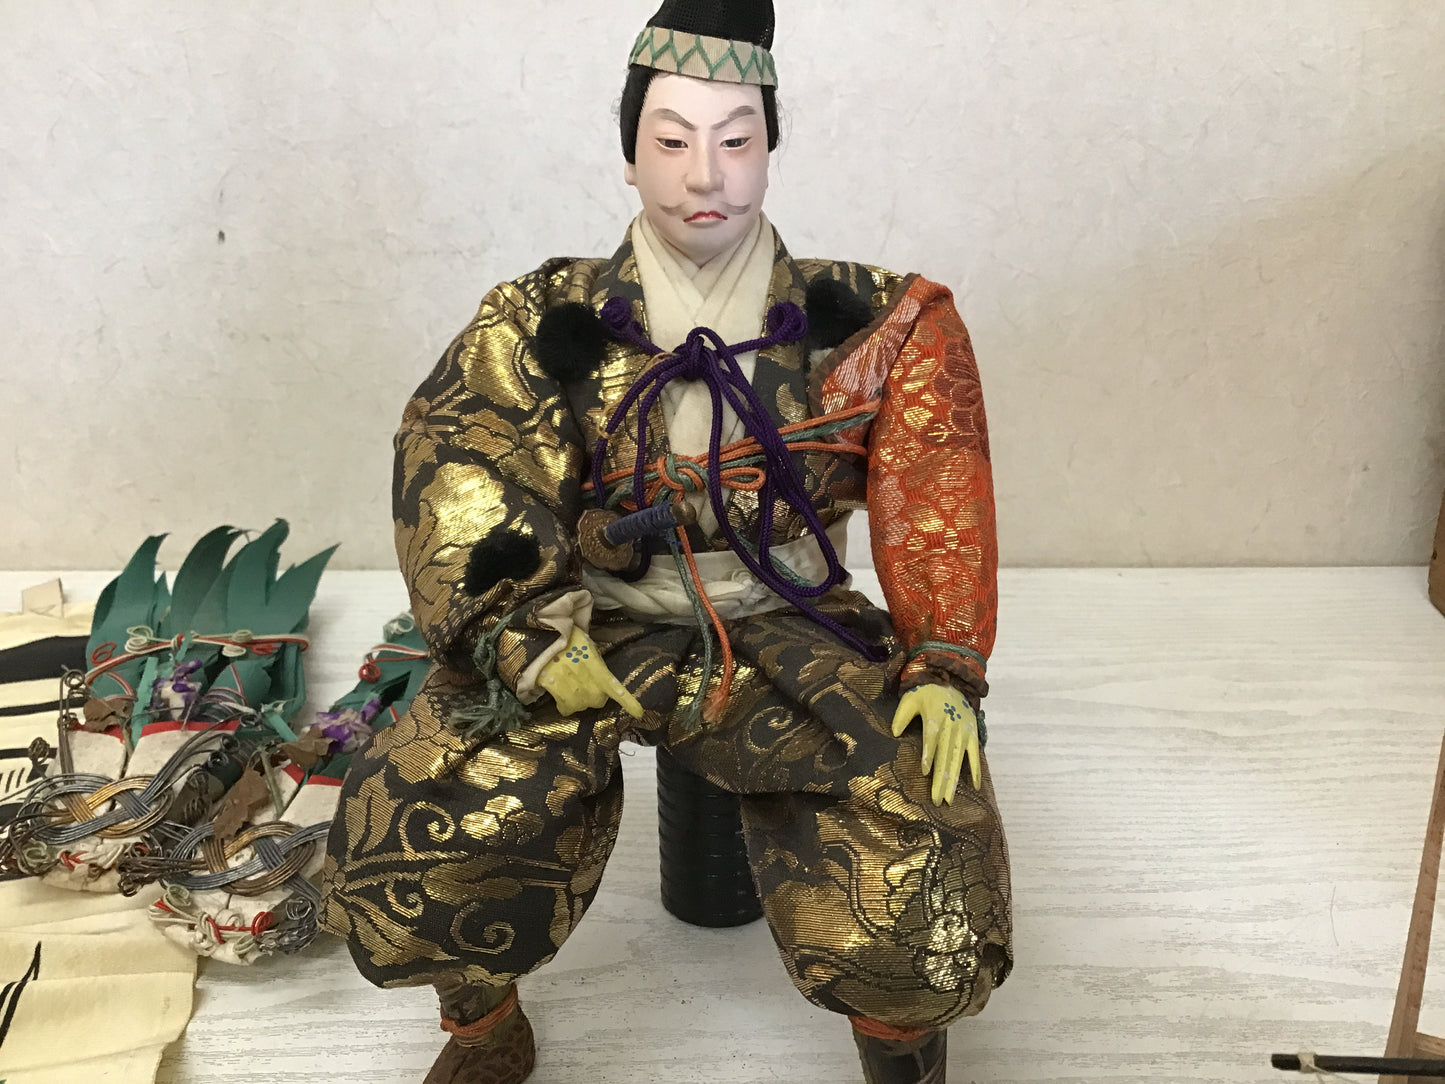 Y2478 NINGYO Boys' May Festival doll Samurai box Japanese vintage antique Japan